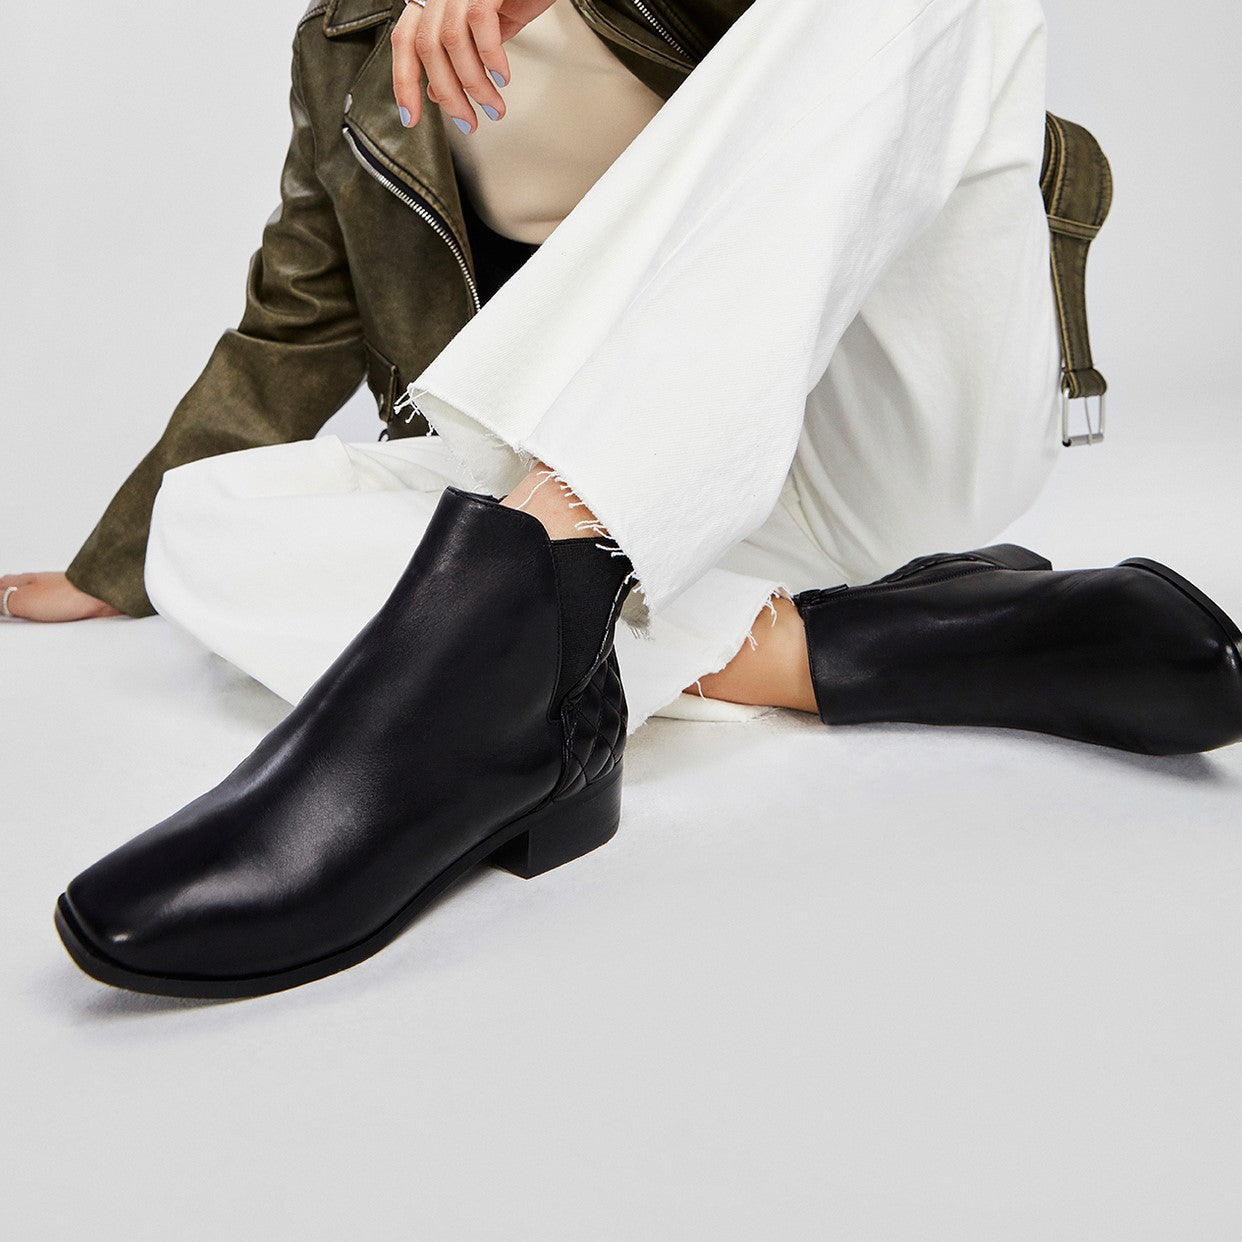 Aldo Women’s Chelsea Boots Torwenflex (Black)